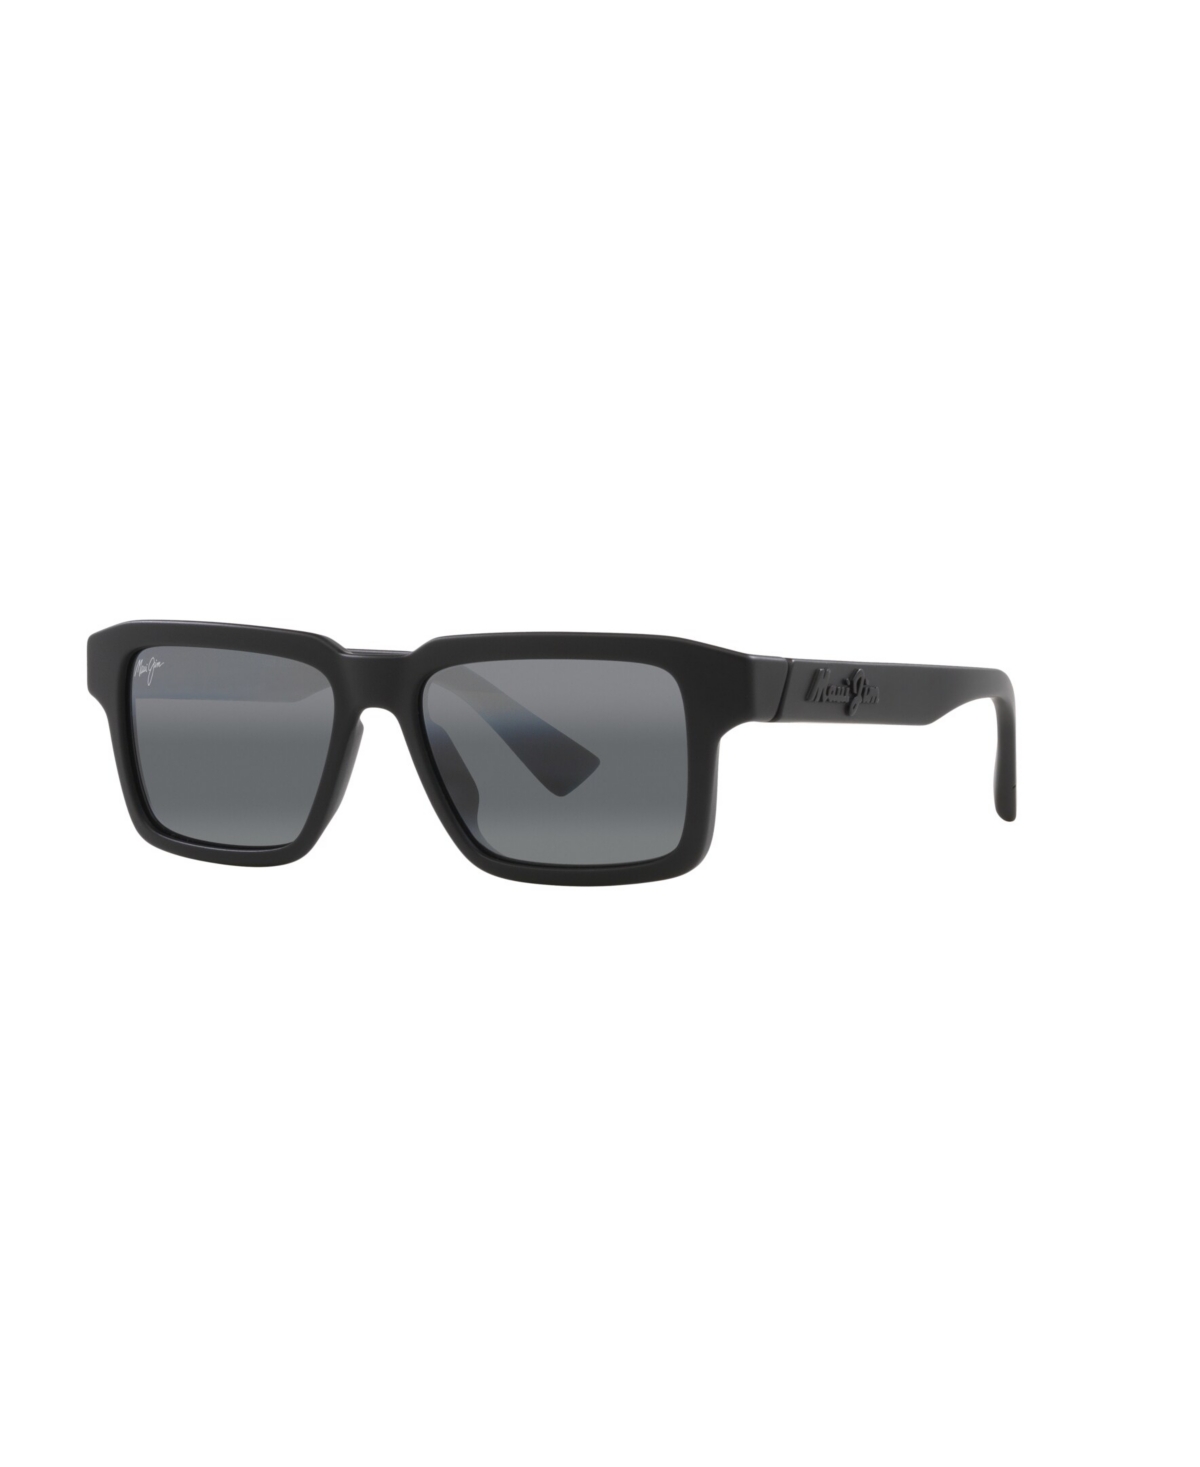 Men's and Women's Polarized Sunglasses, Kahiko - Matte Black